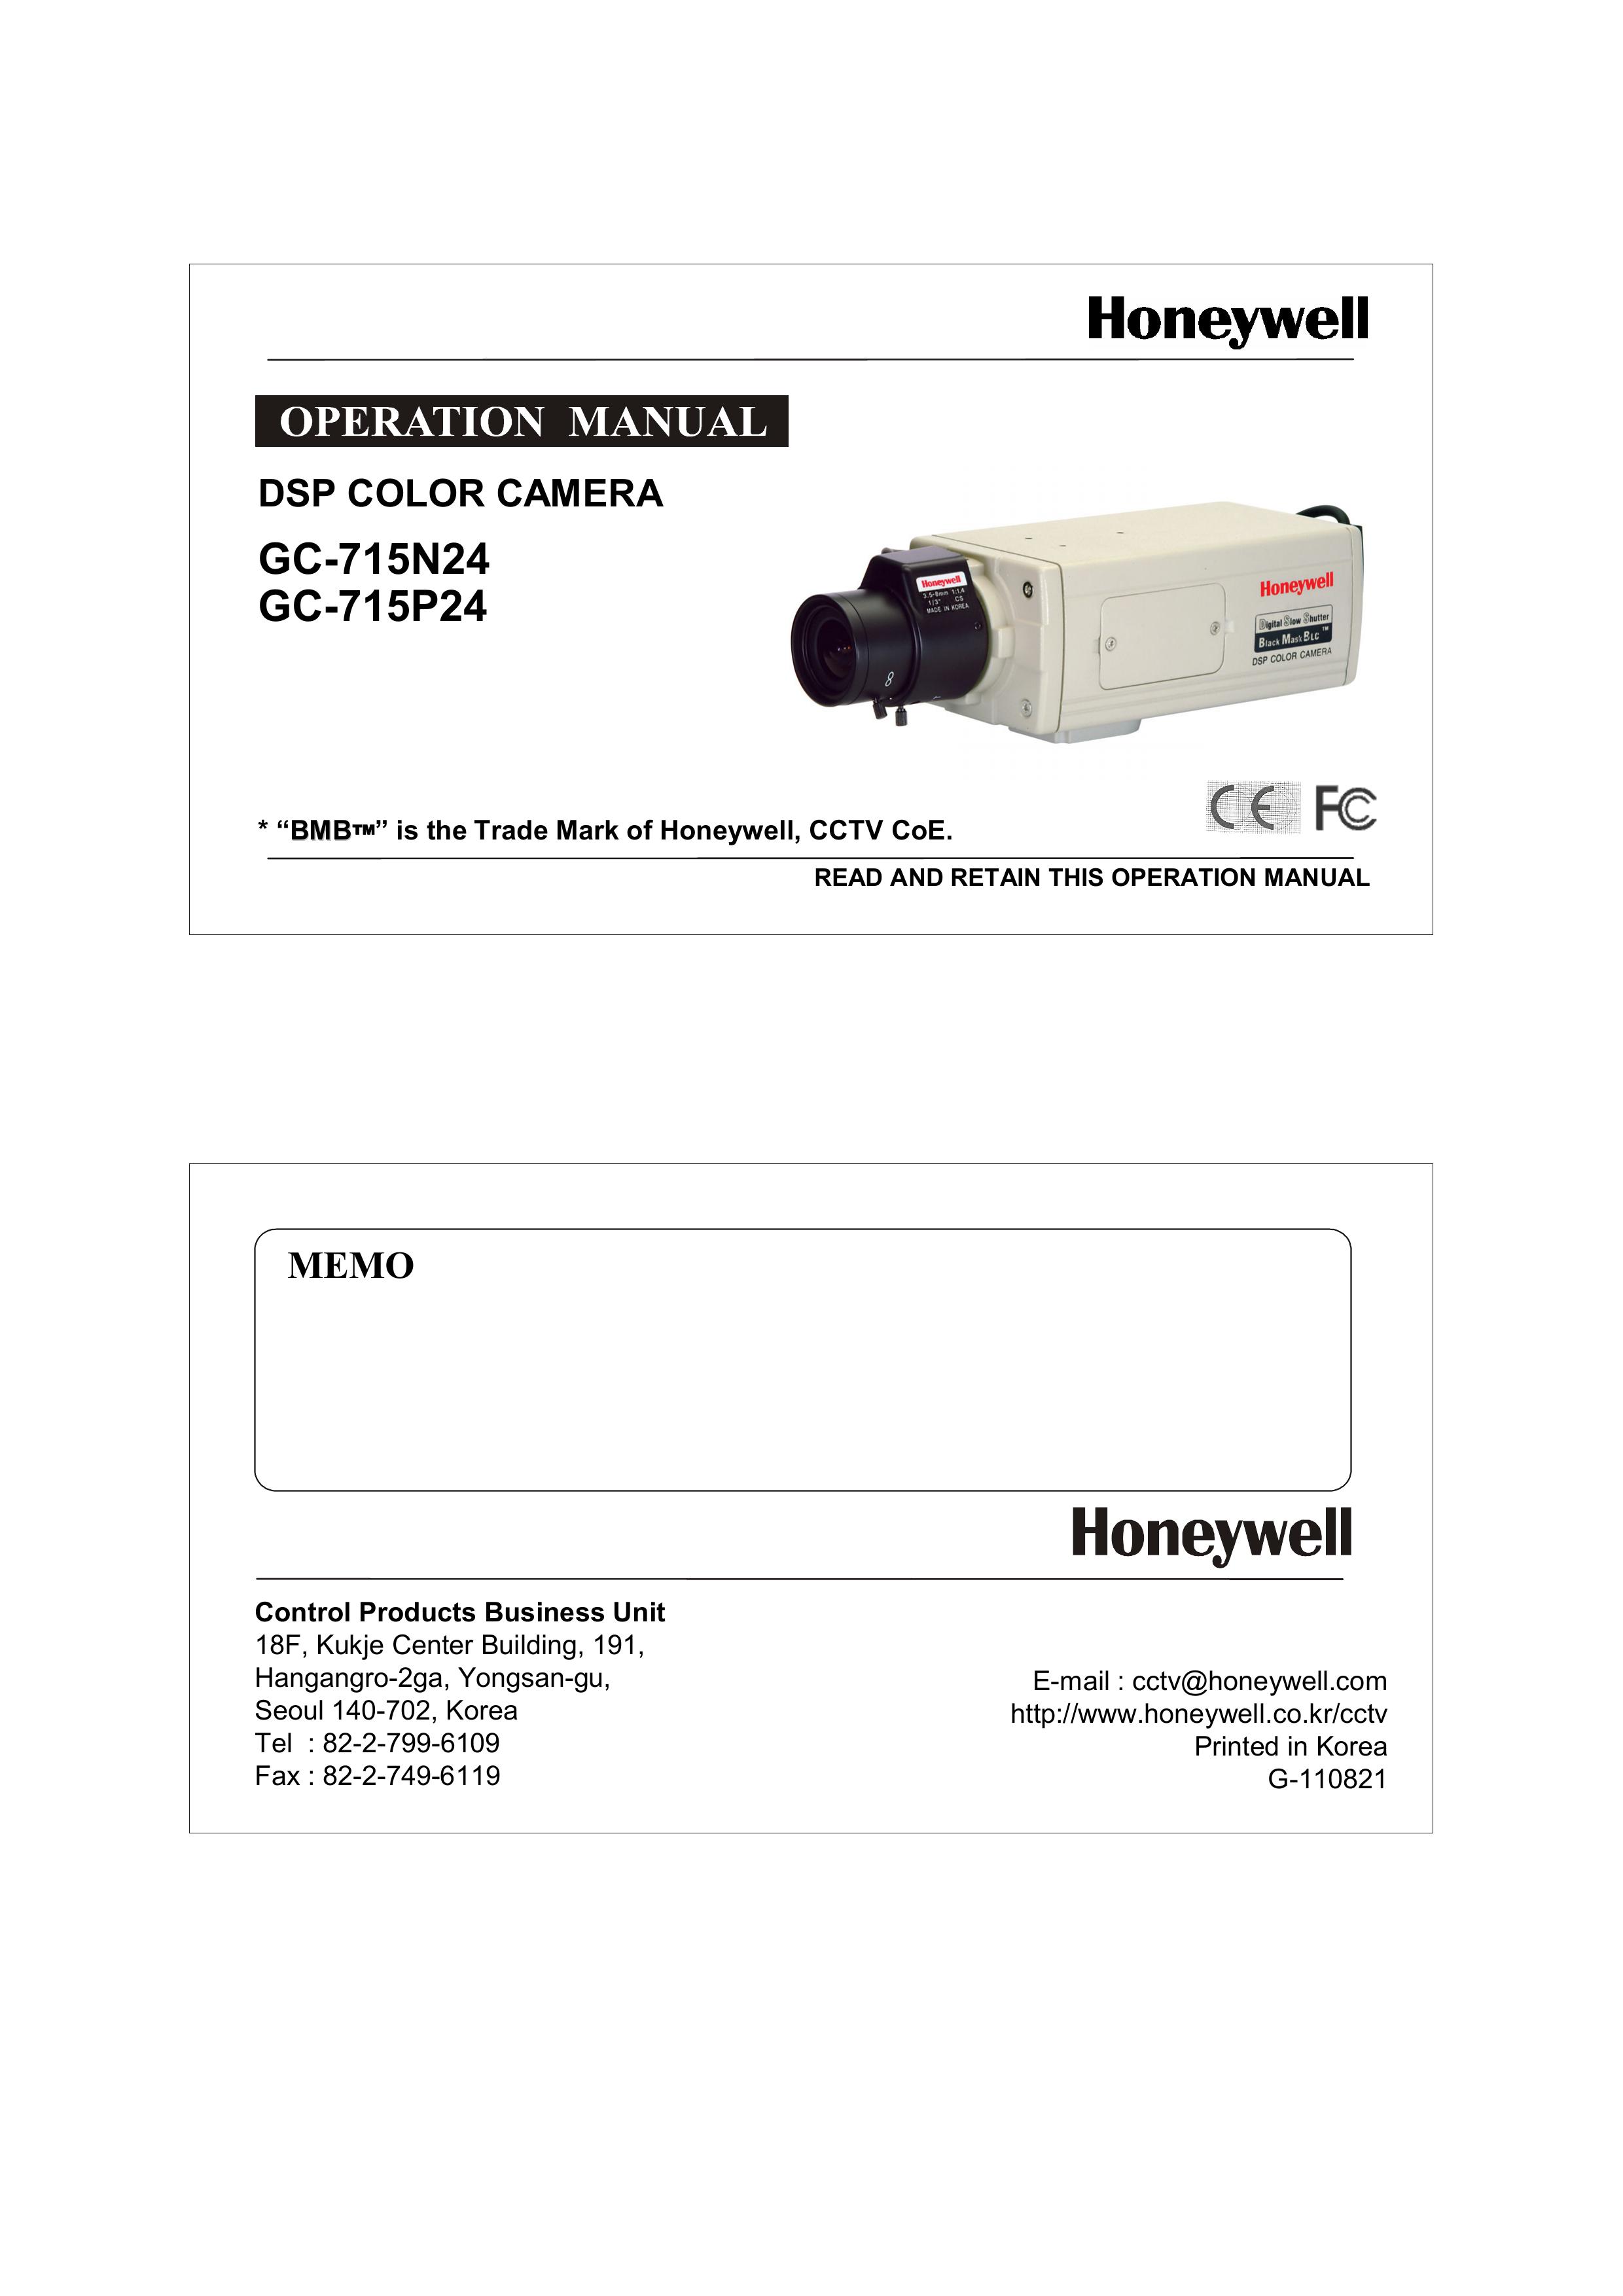 Honeywell GC-715N24 Digital Camera User Manual